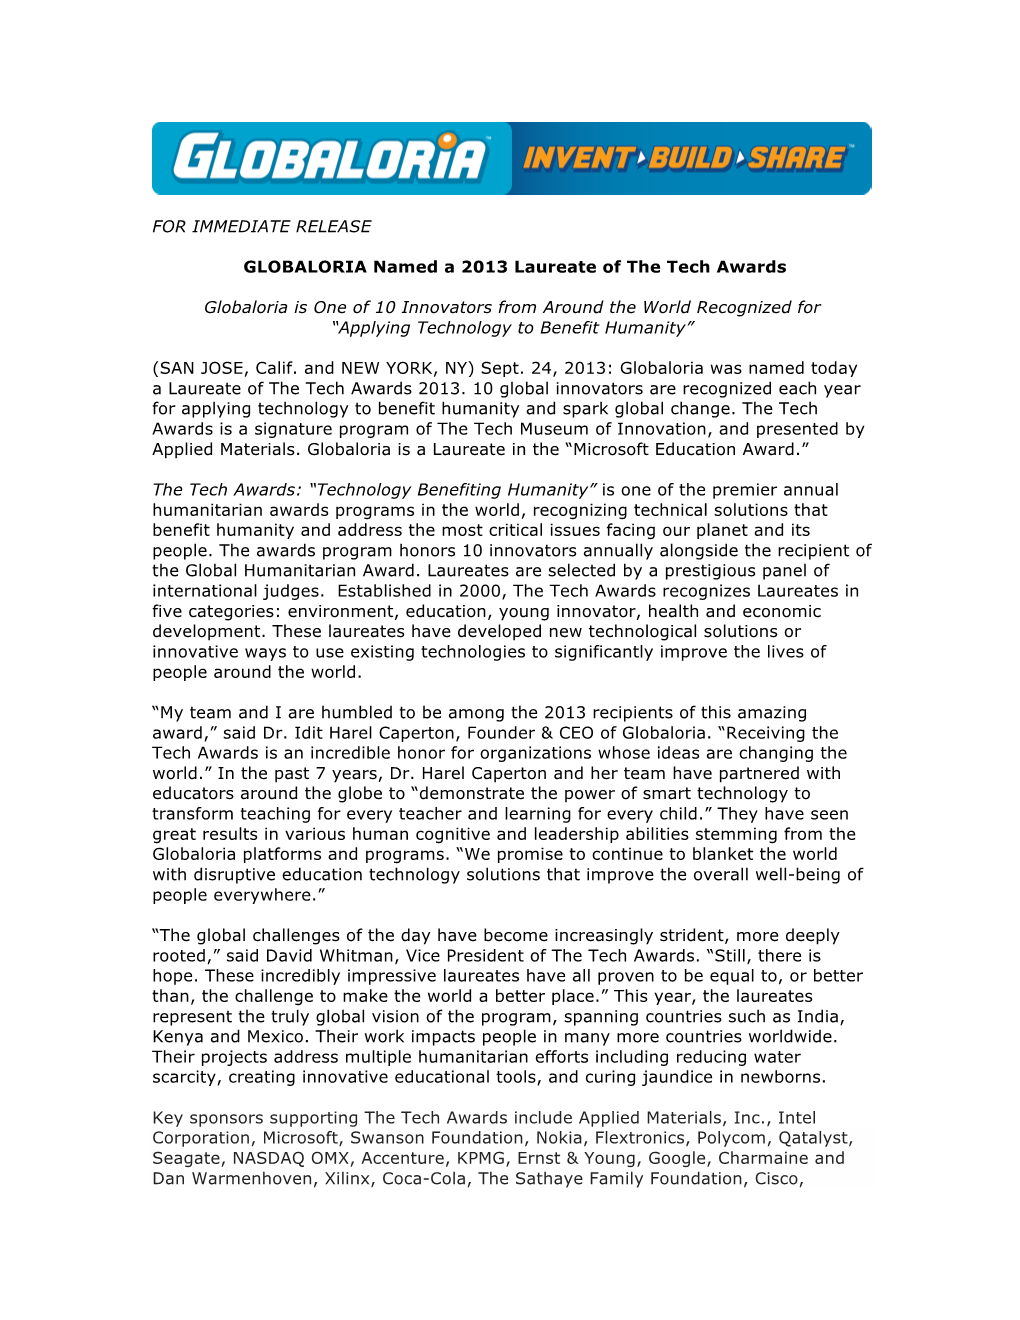 Tech Awards Press Release Globaloria Sept 2013